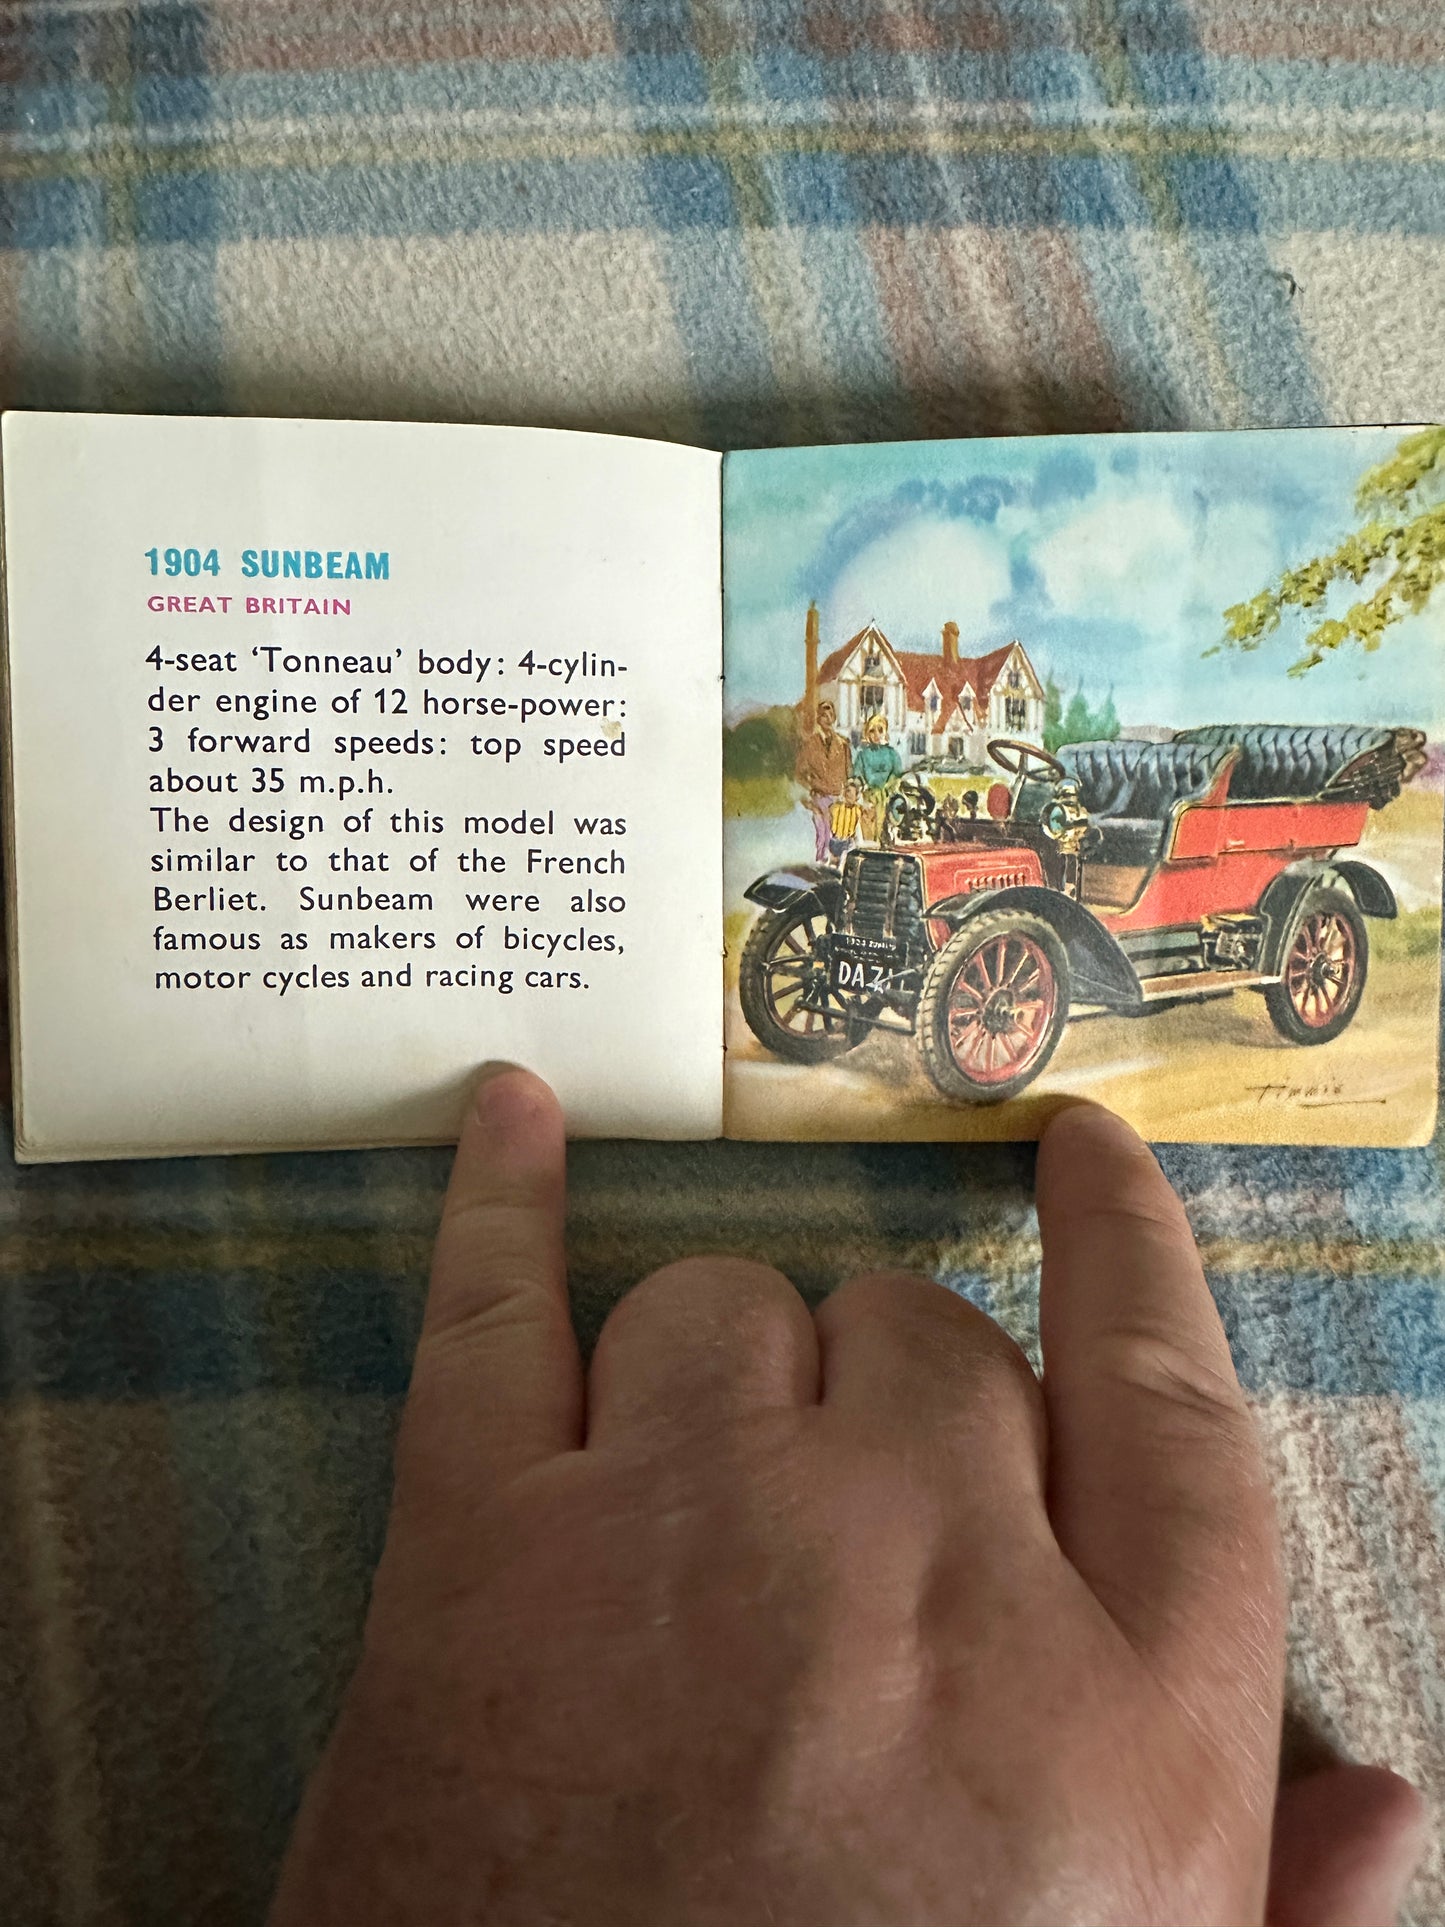 1960’s Veteran & Vintage Cars(Book 2) Orbit Books